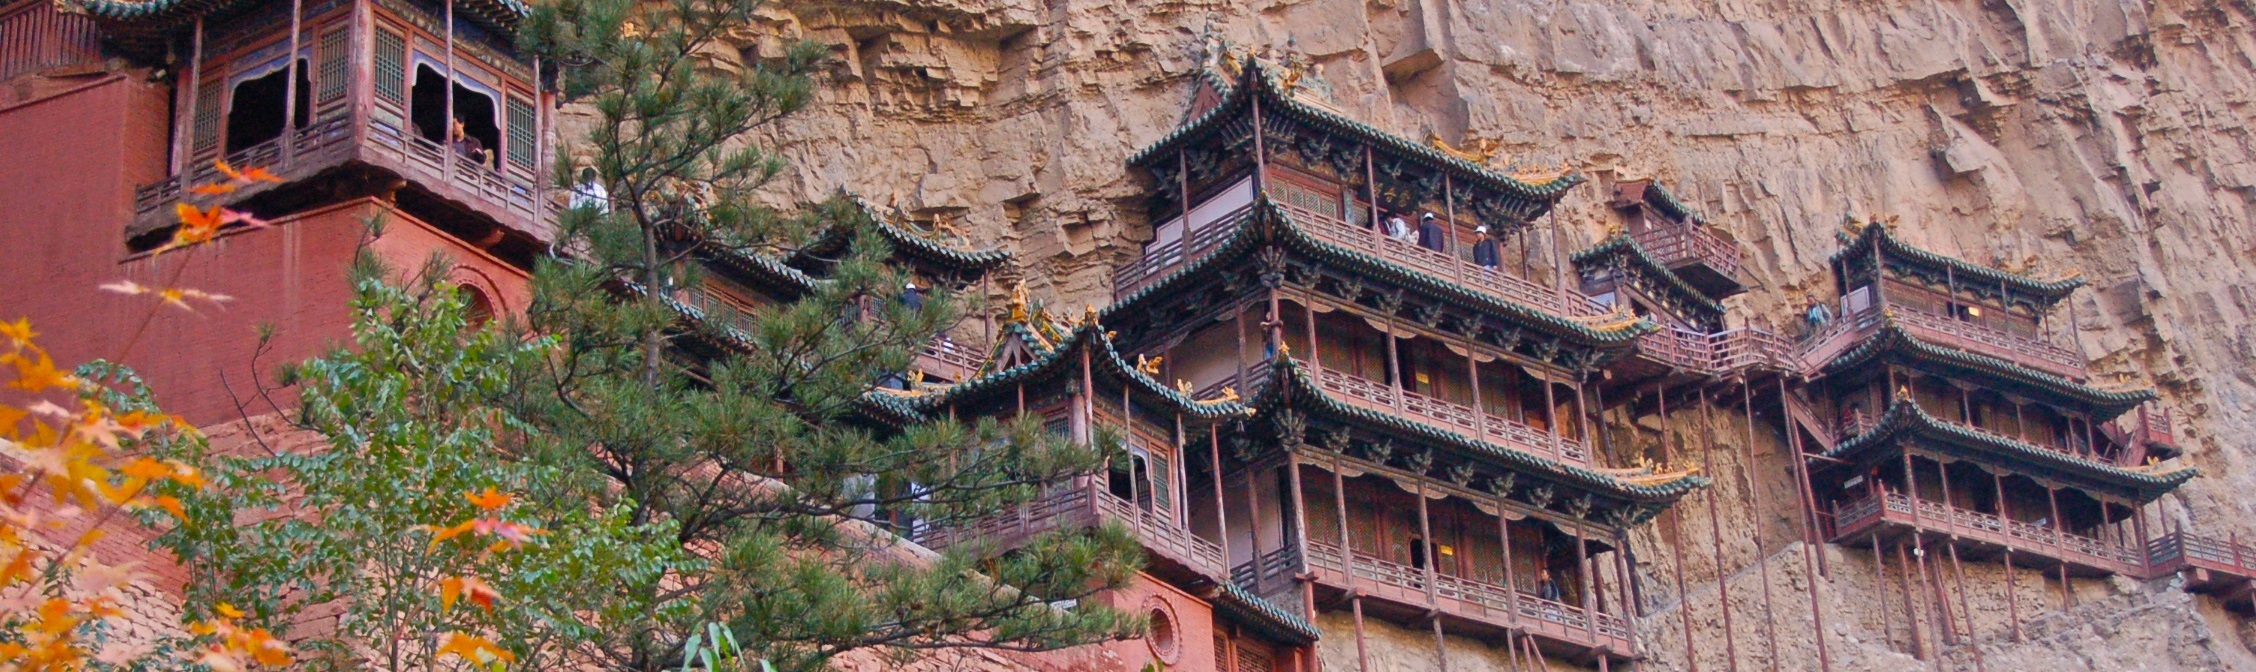 Monasterio Colgante, Datong, China